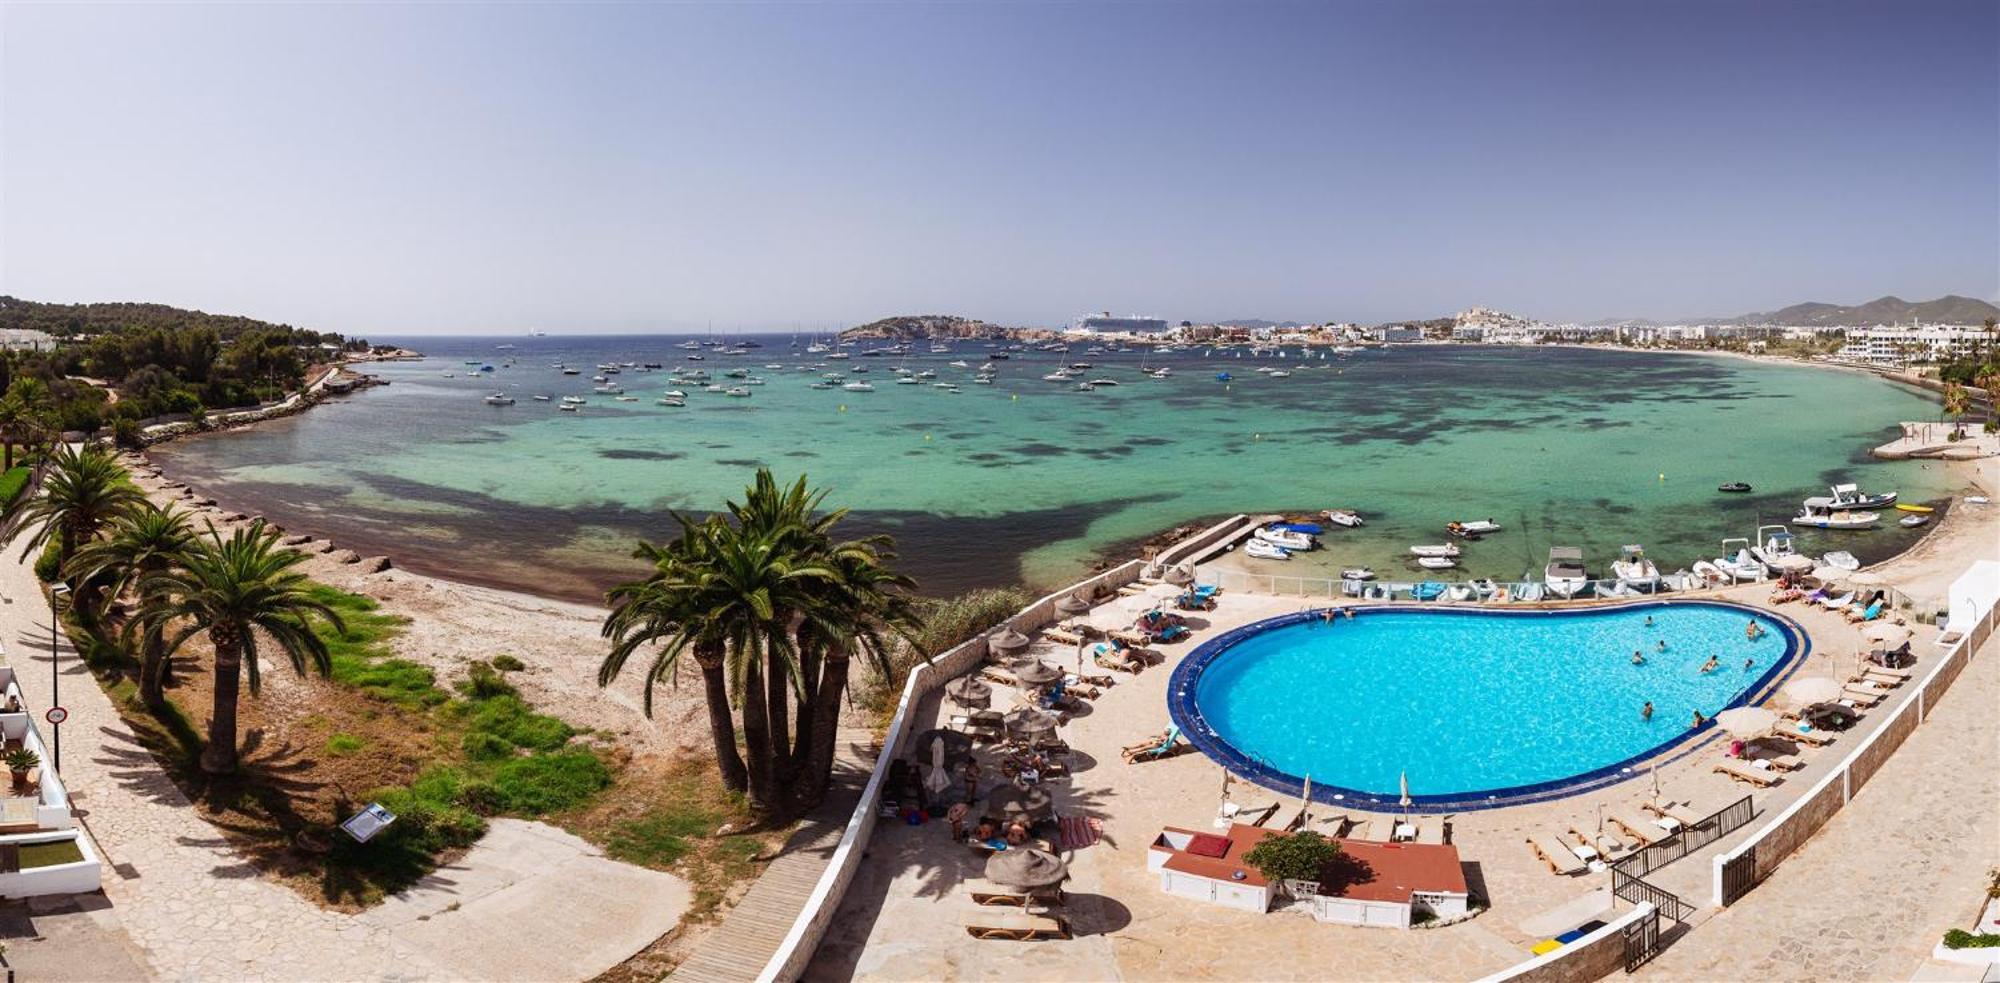 Hotel Simbad Ibiza Exterior foto